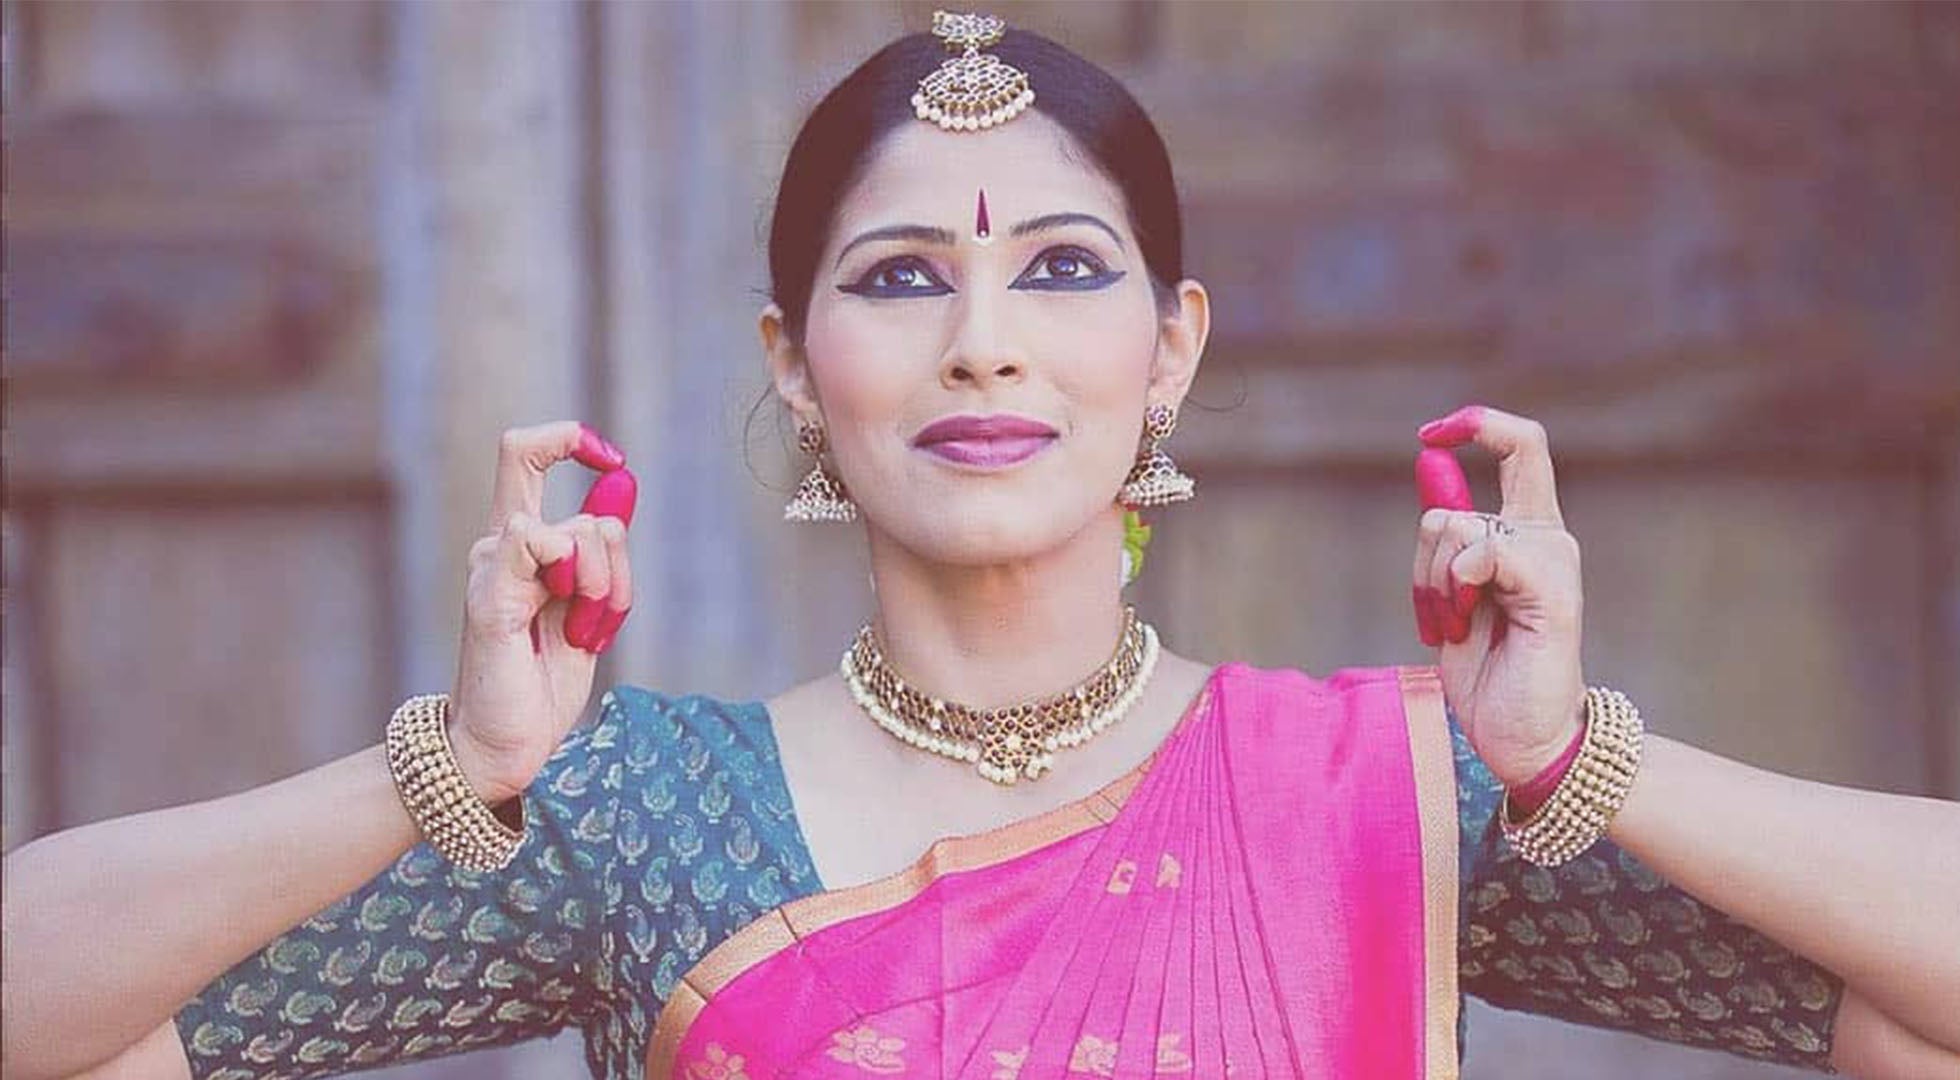  Finding Beauty in Discipline - Praachi Saathi, Indian Bharatnatyam Dancer 